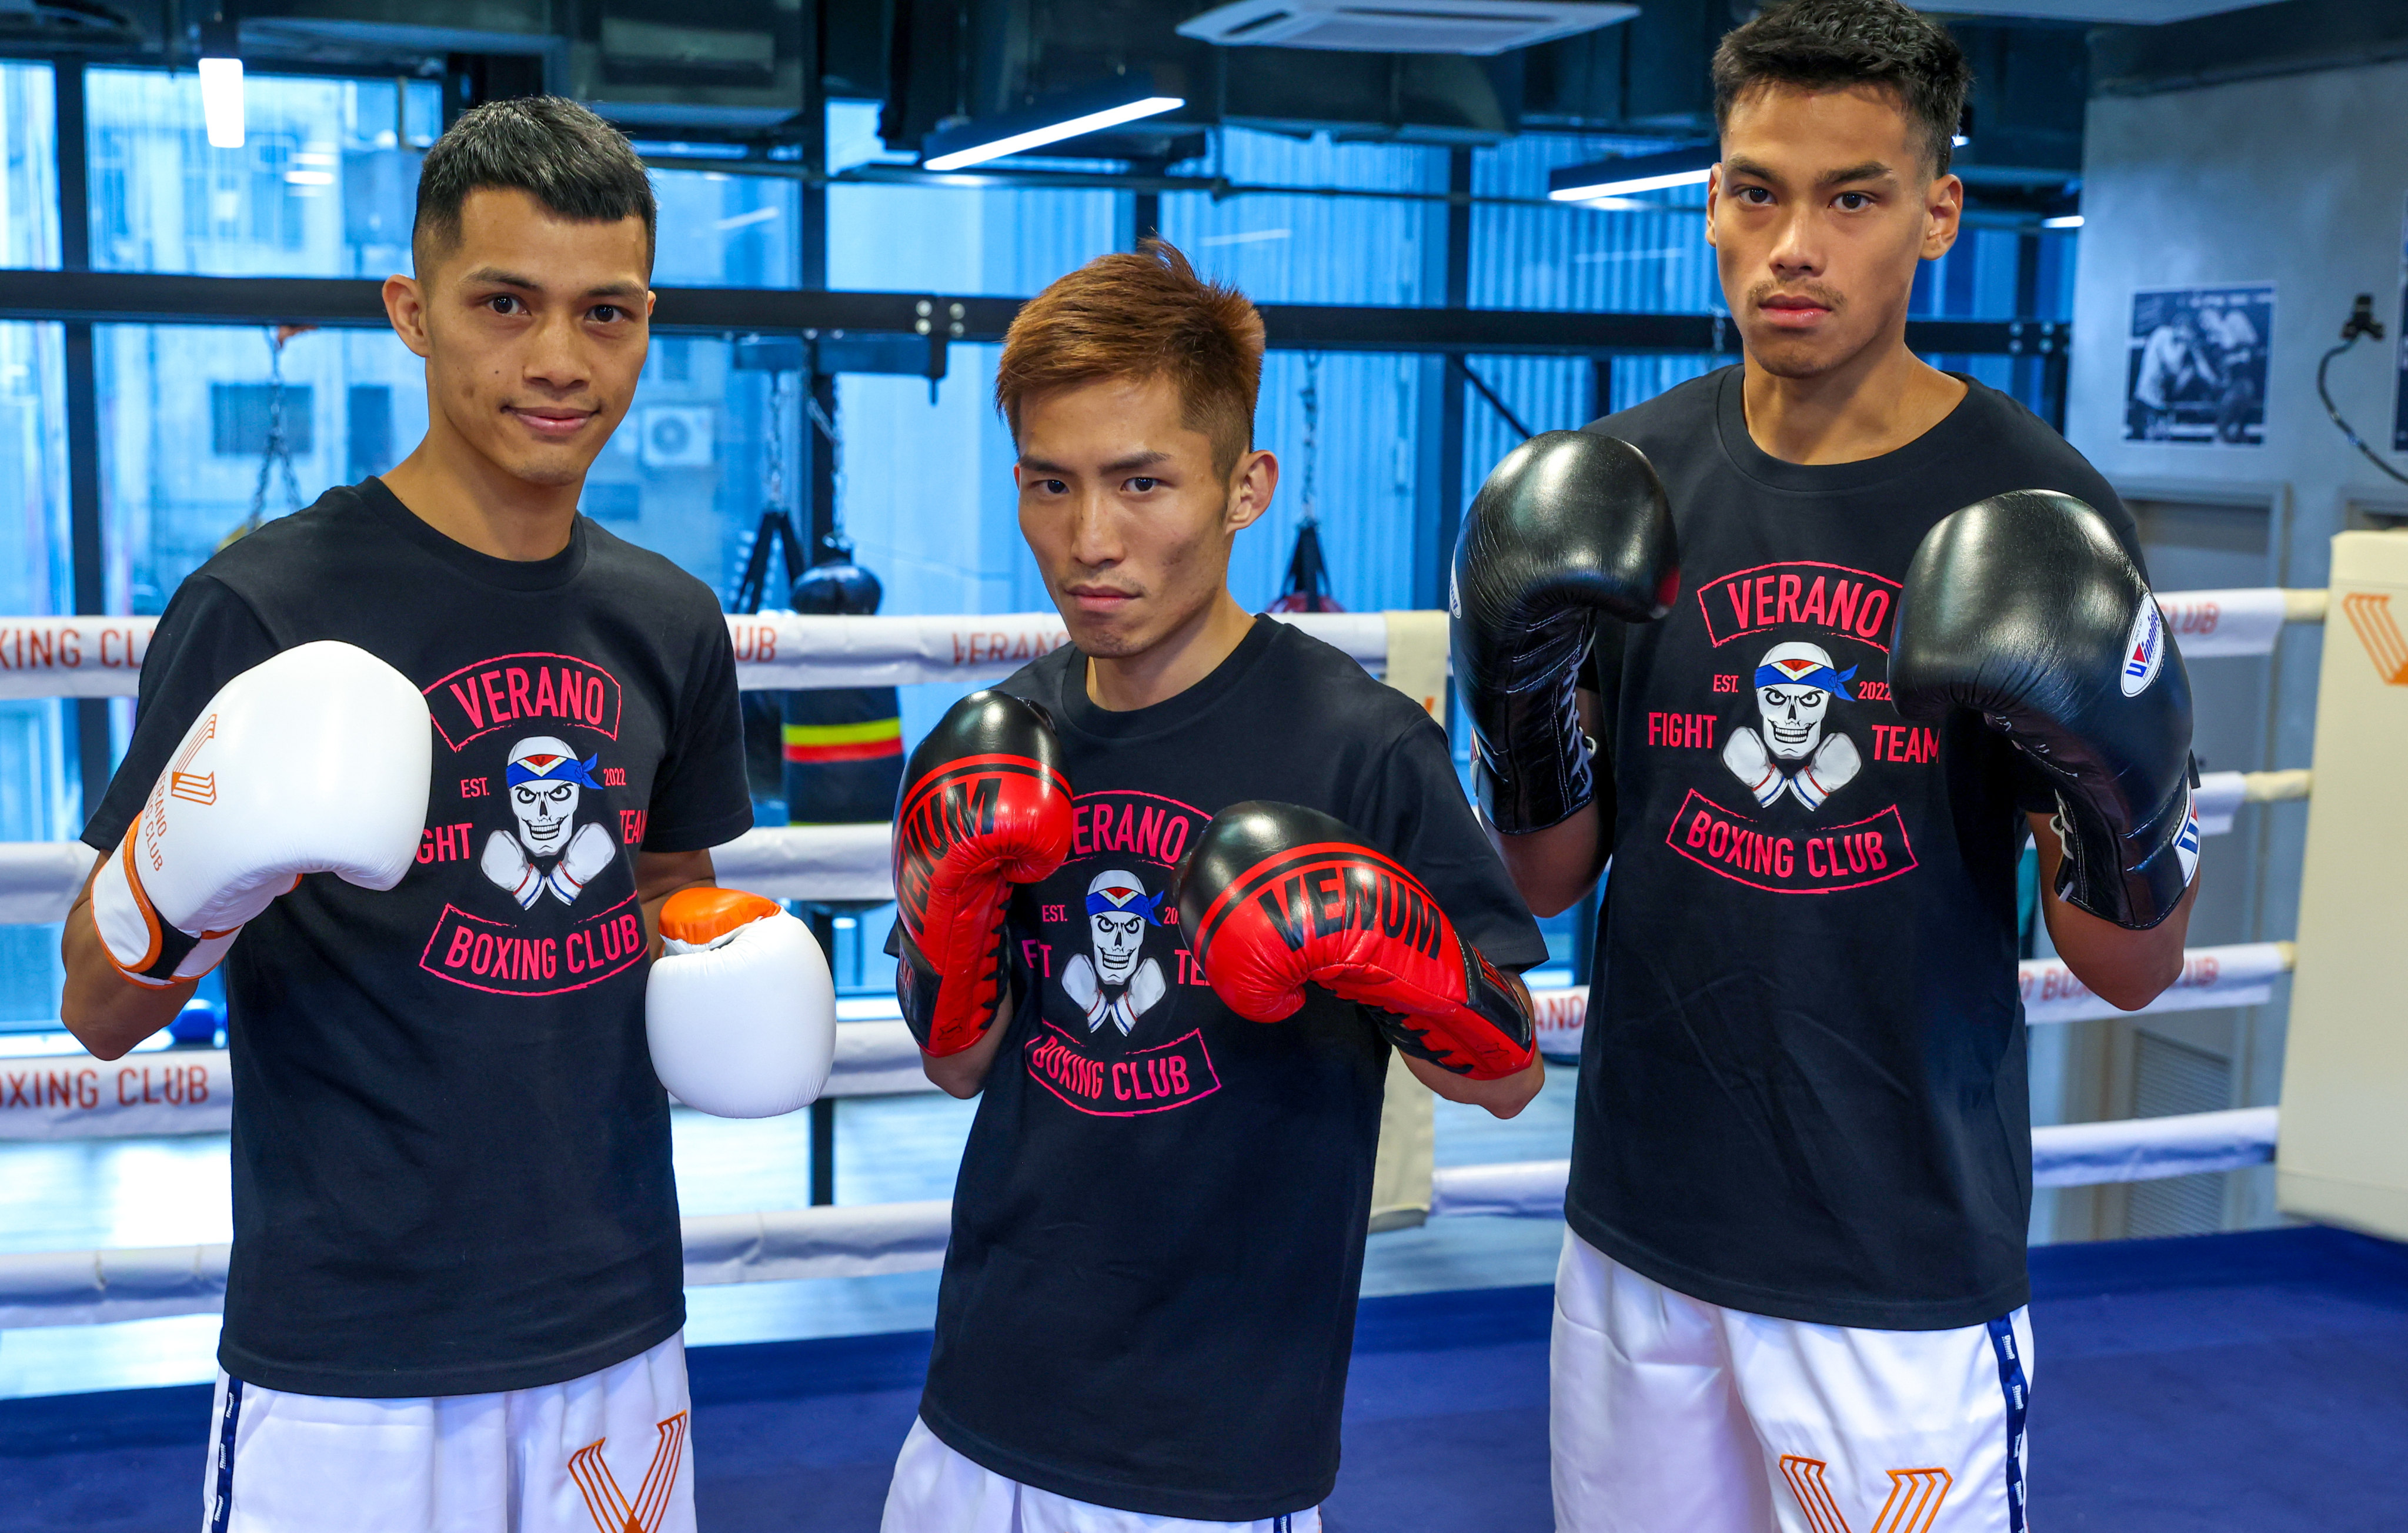 Hong Kong boxers (left to right) Lee Ka-wing, Raymond Poon Kai-ching, and Saagar Pradhan at Verano Boxing Club in Sai Ying Pun before their fights in Thailand.
Photo: Yik Yeung-man